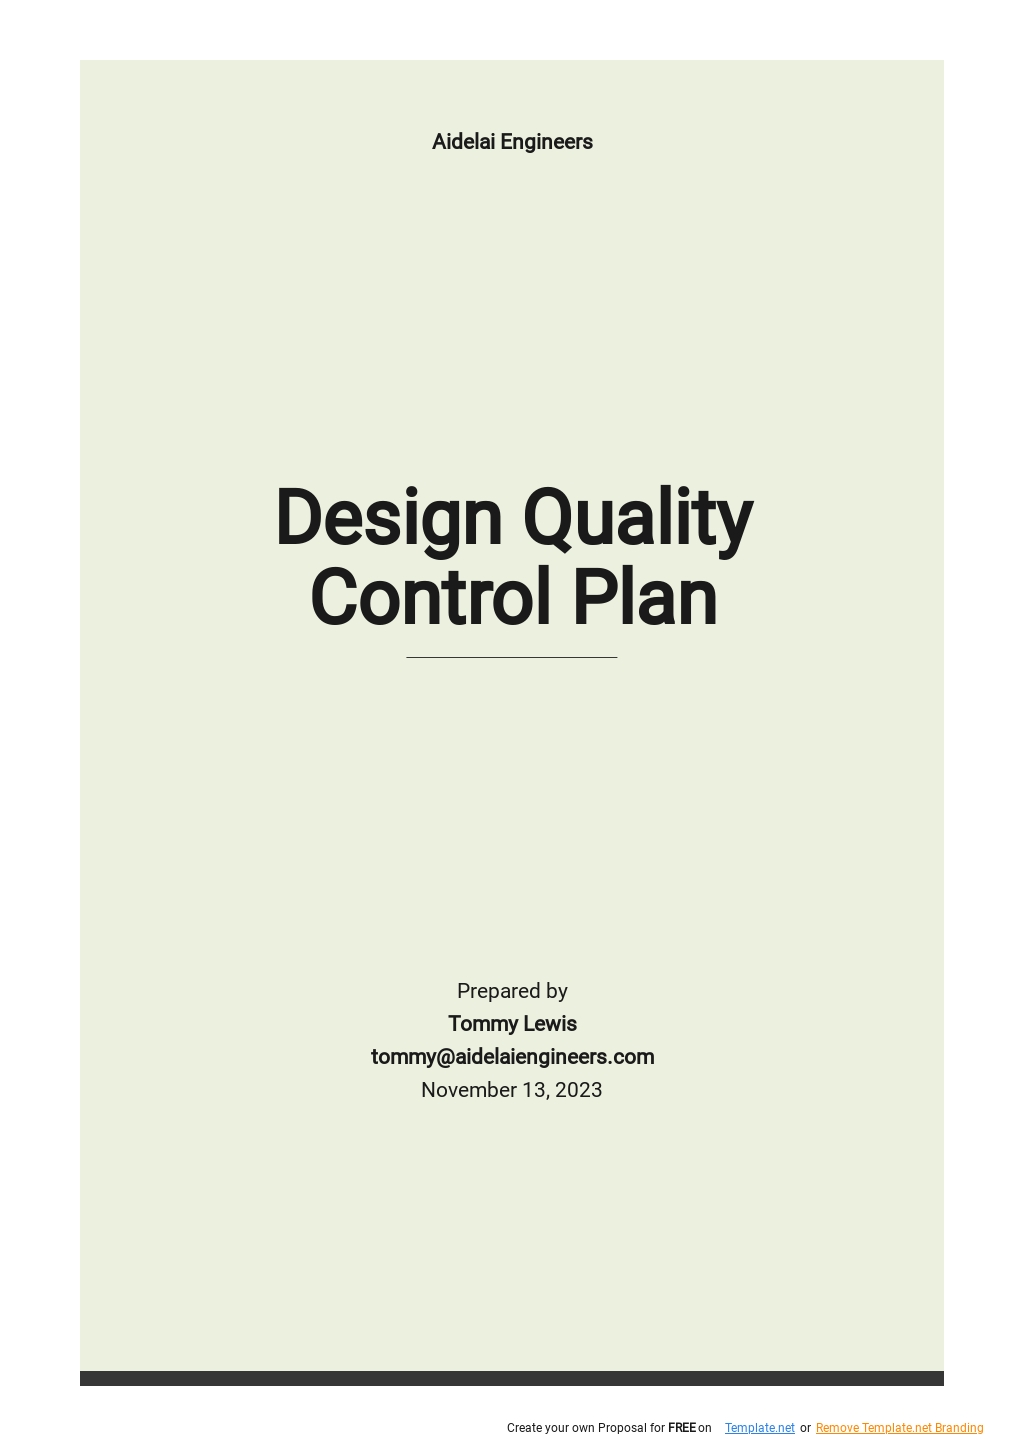 Design Quality Control Plan Template